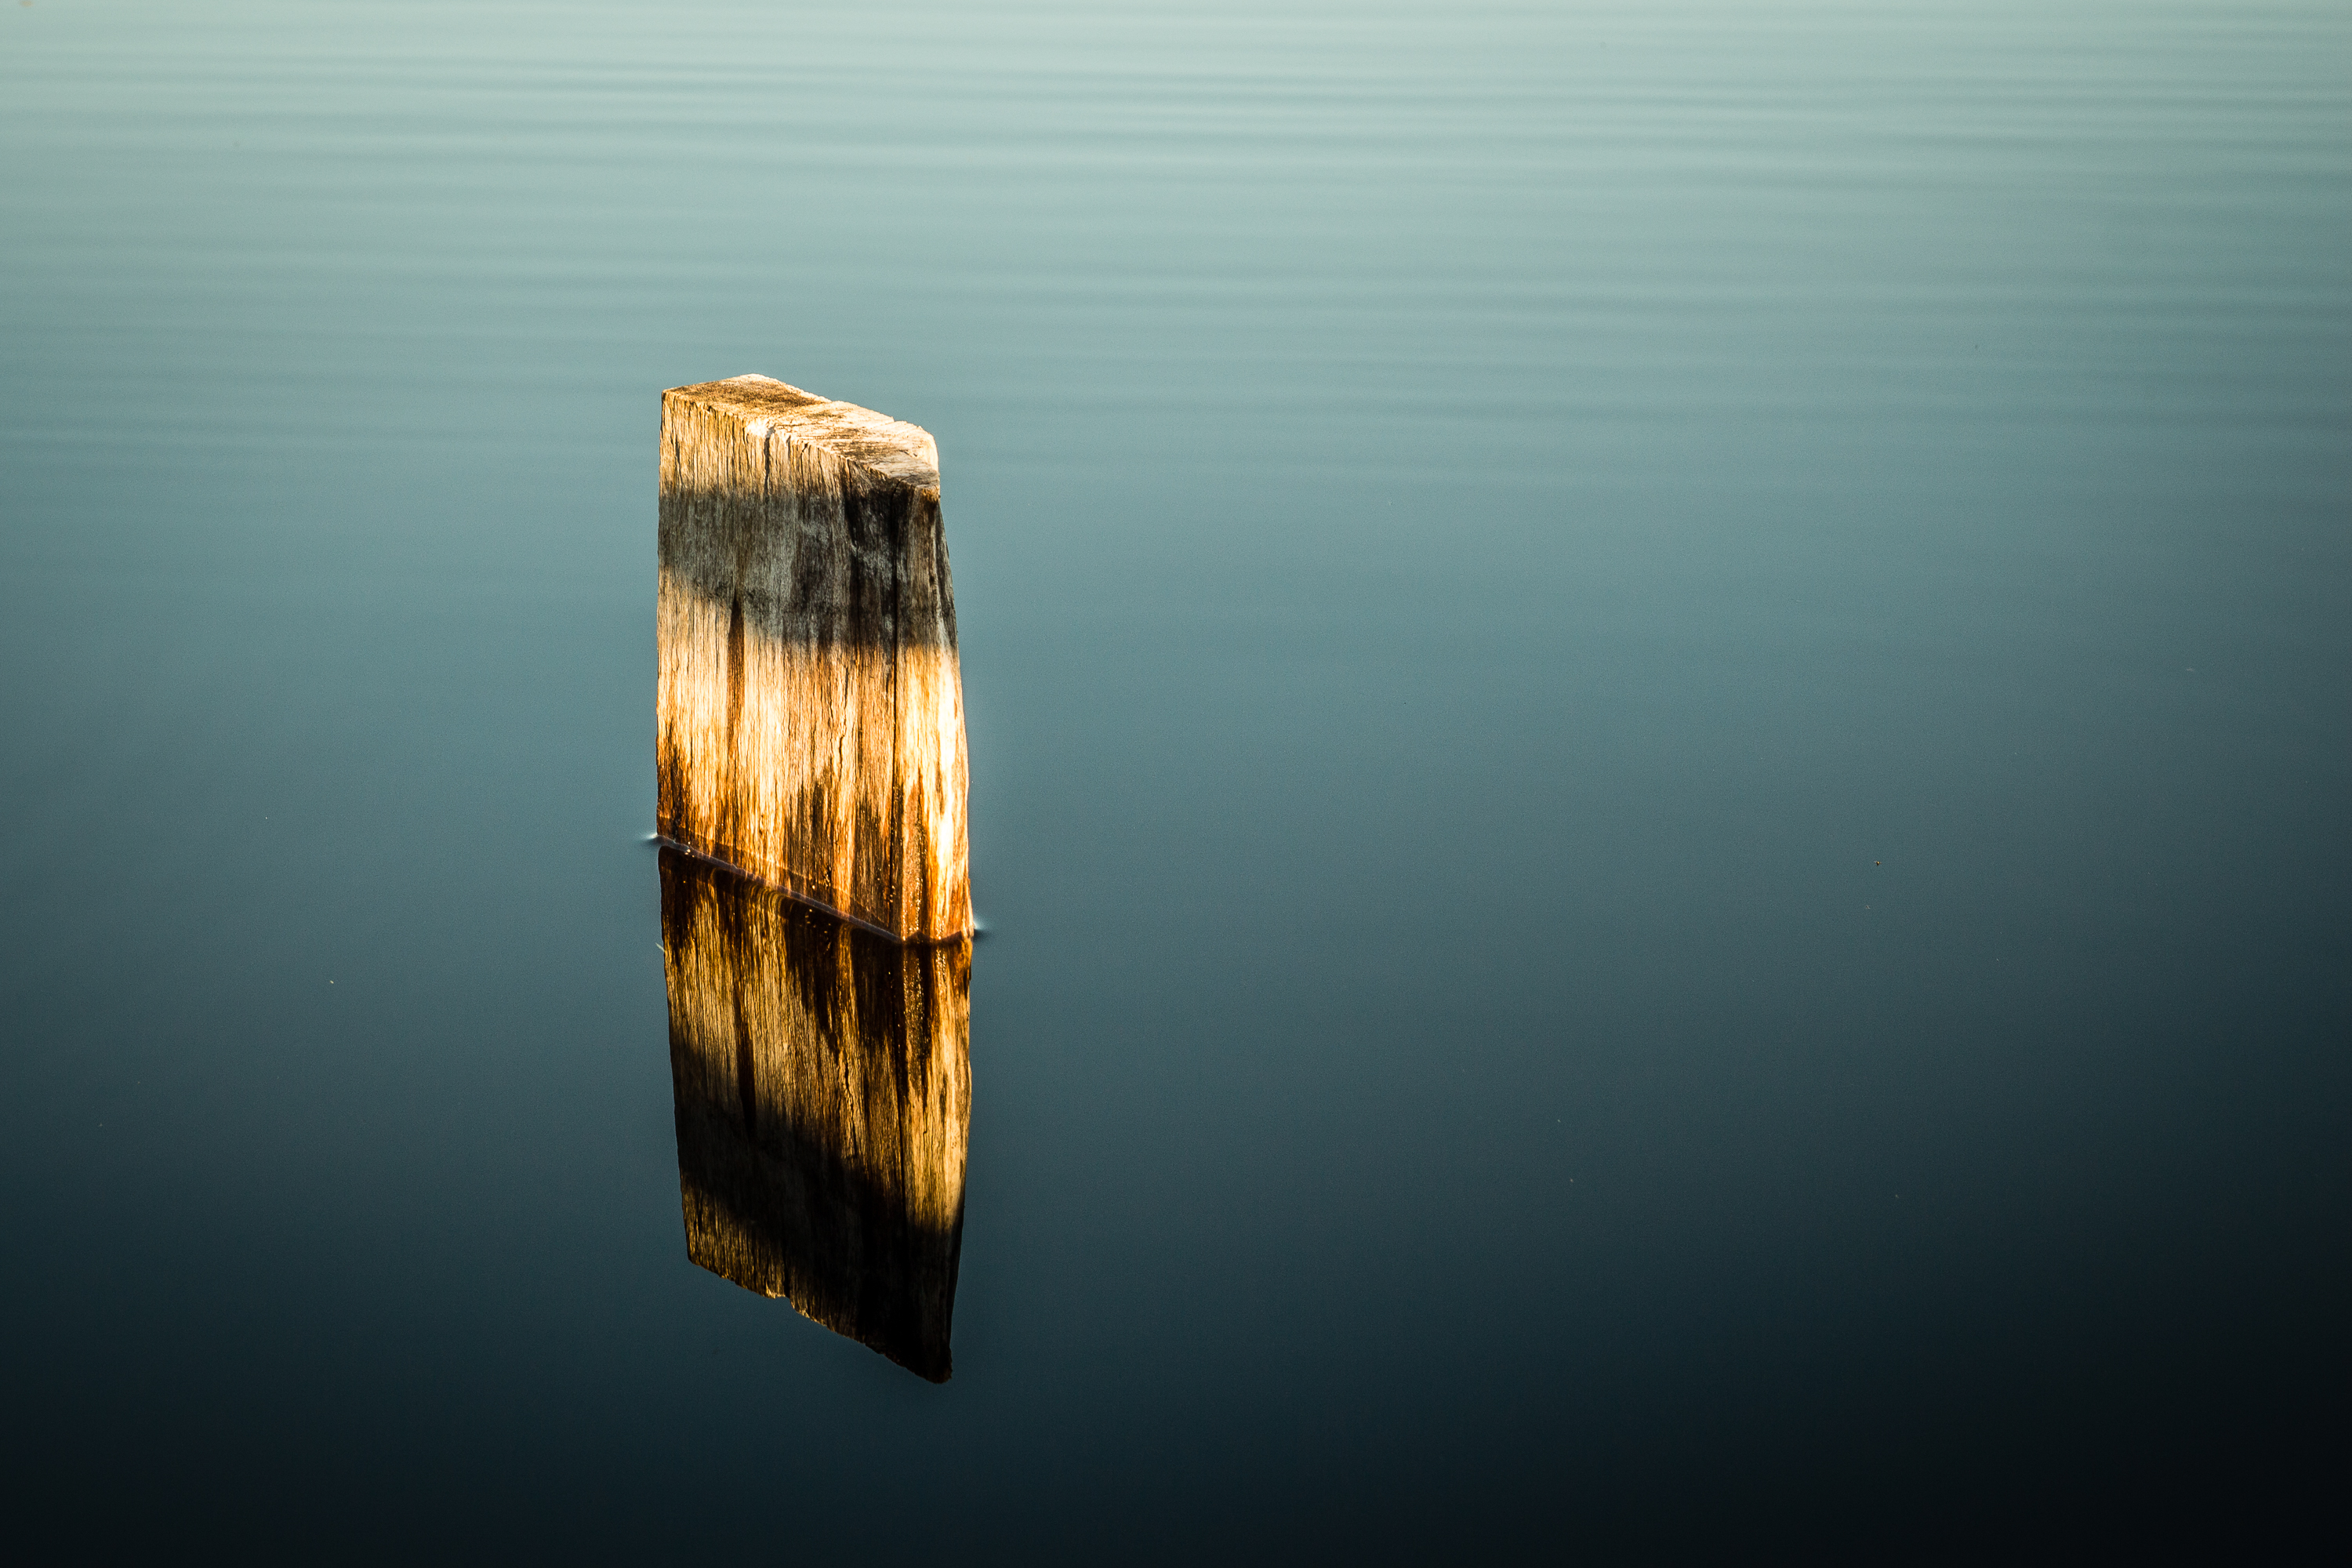 Plank In The Pond Via @Atisgailis